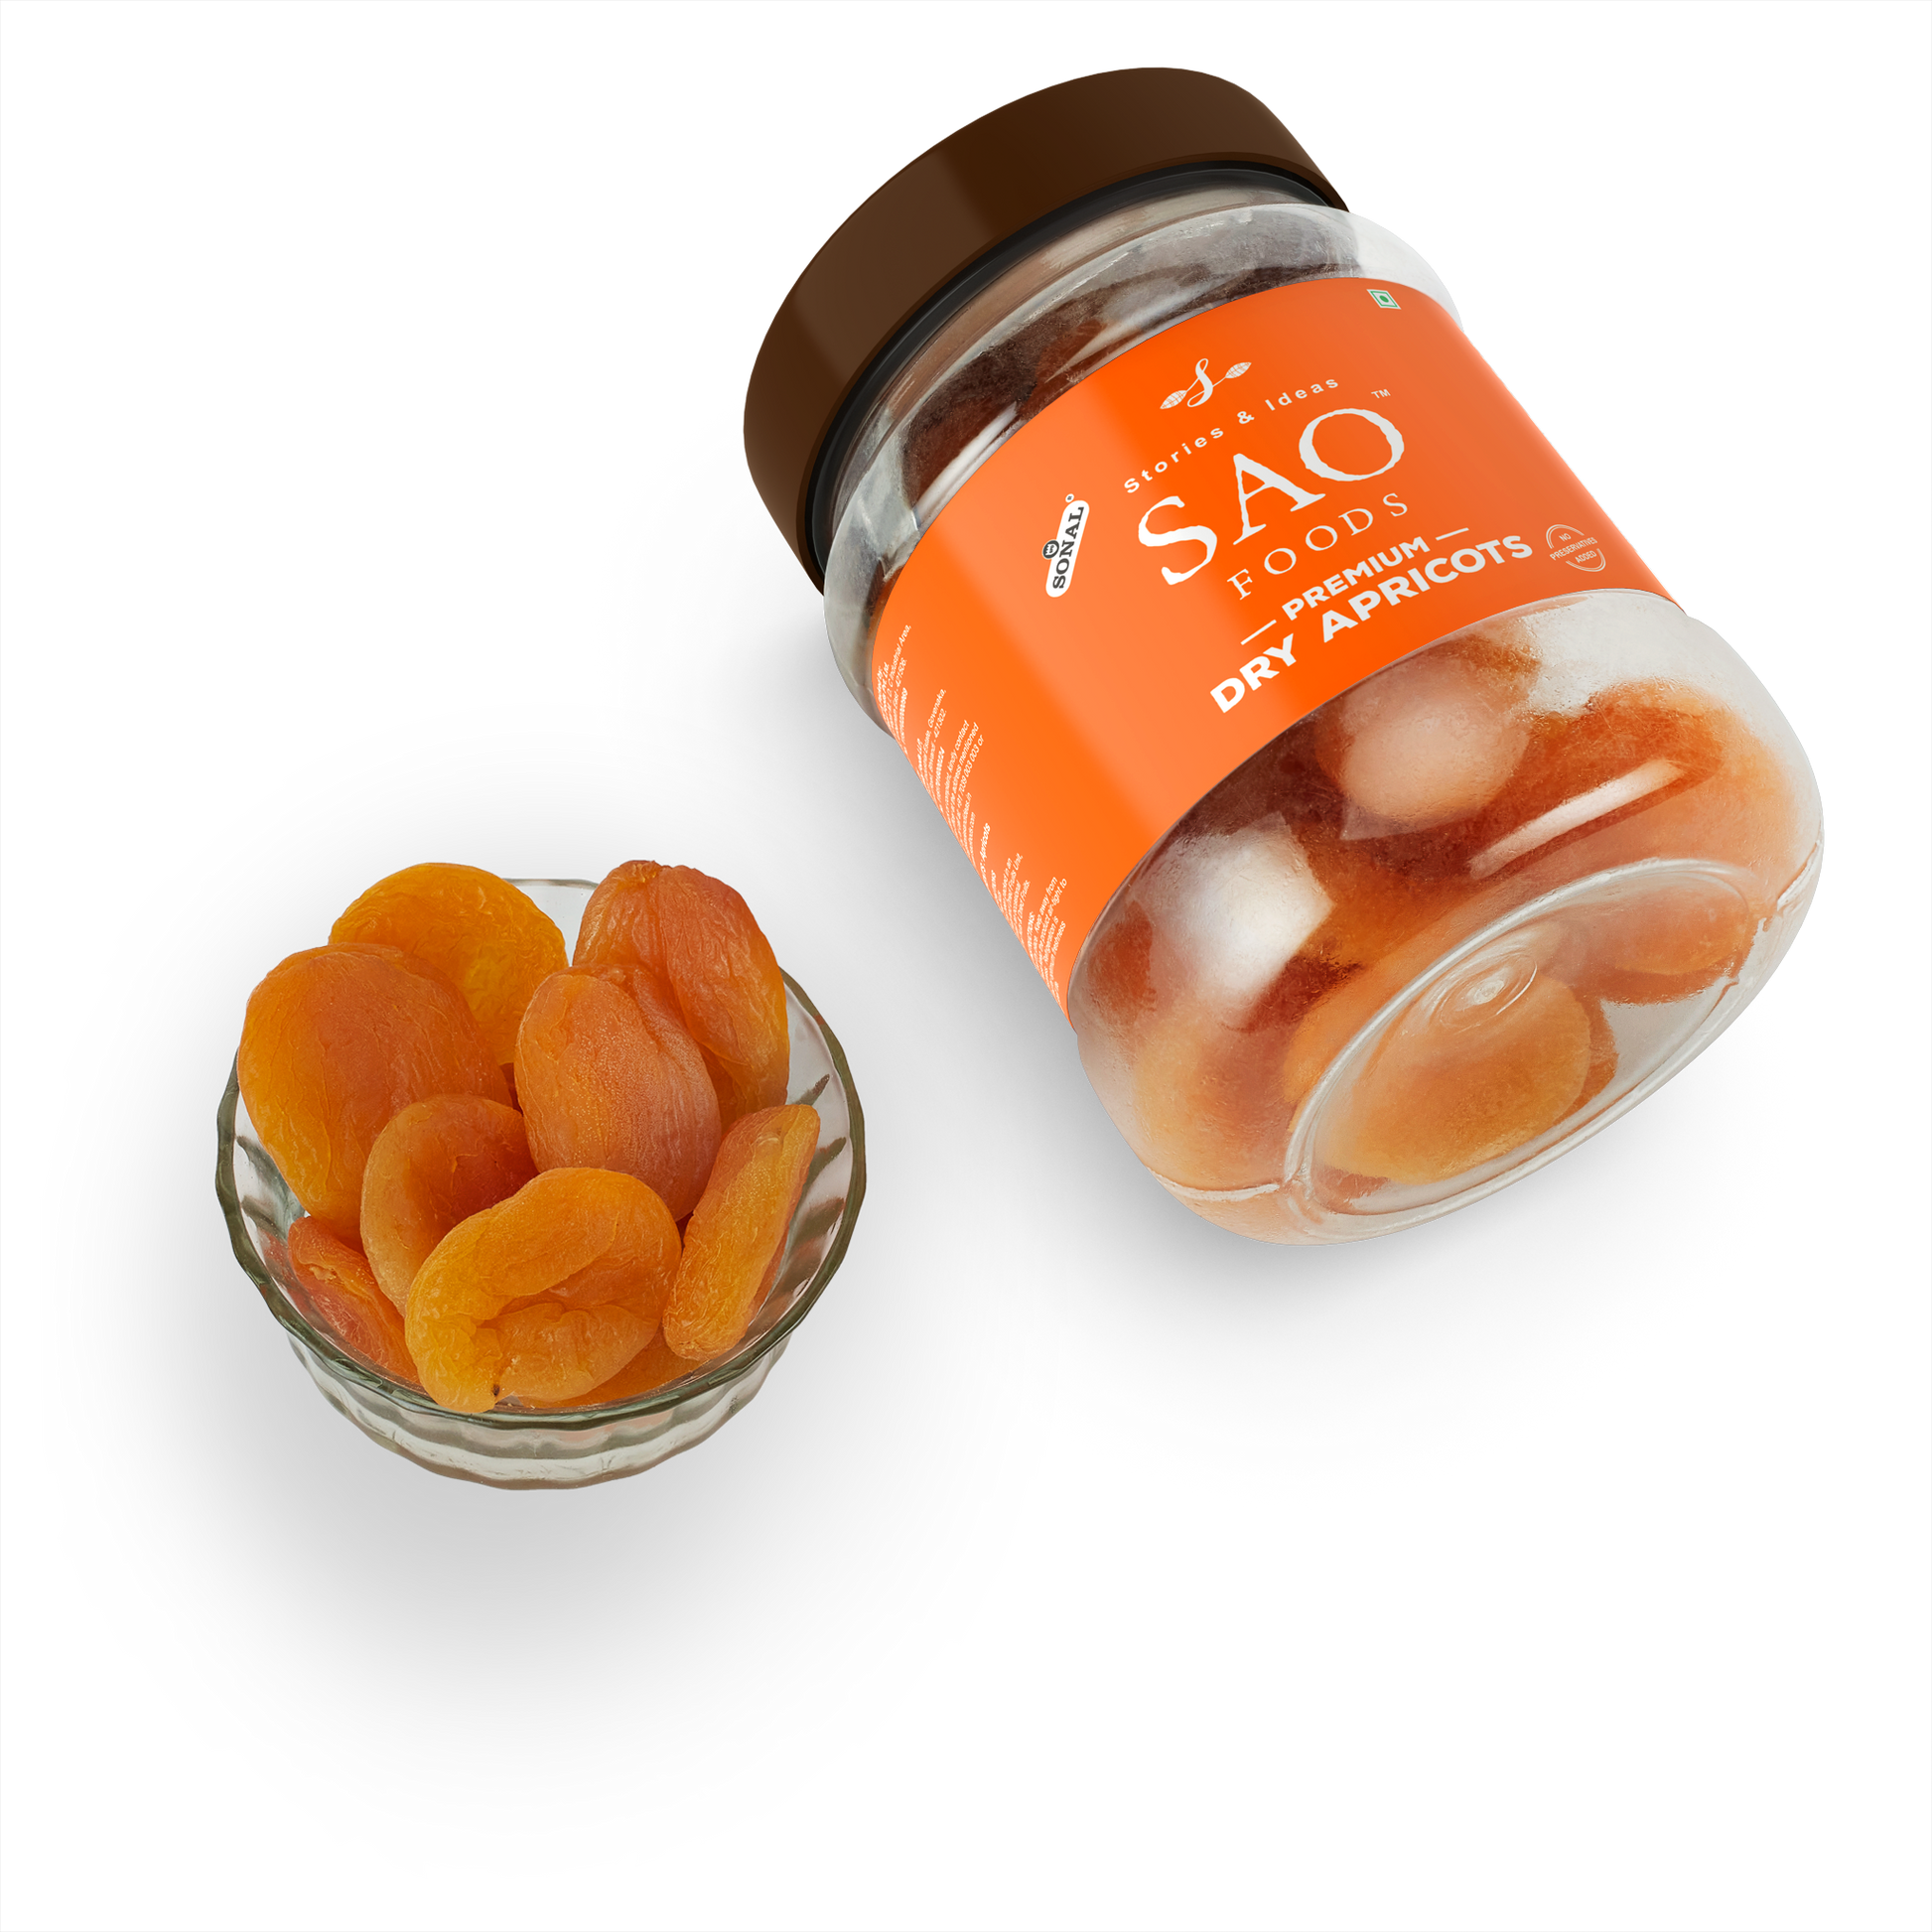 SAO Foods Premium Dry Apricots 250 gm